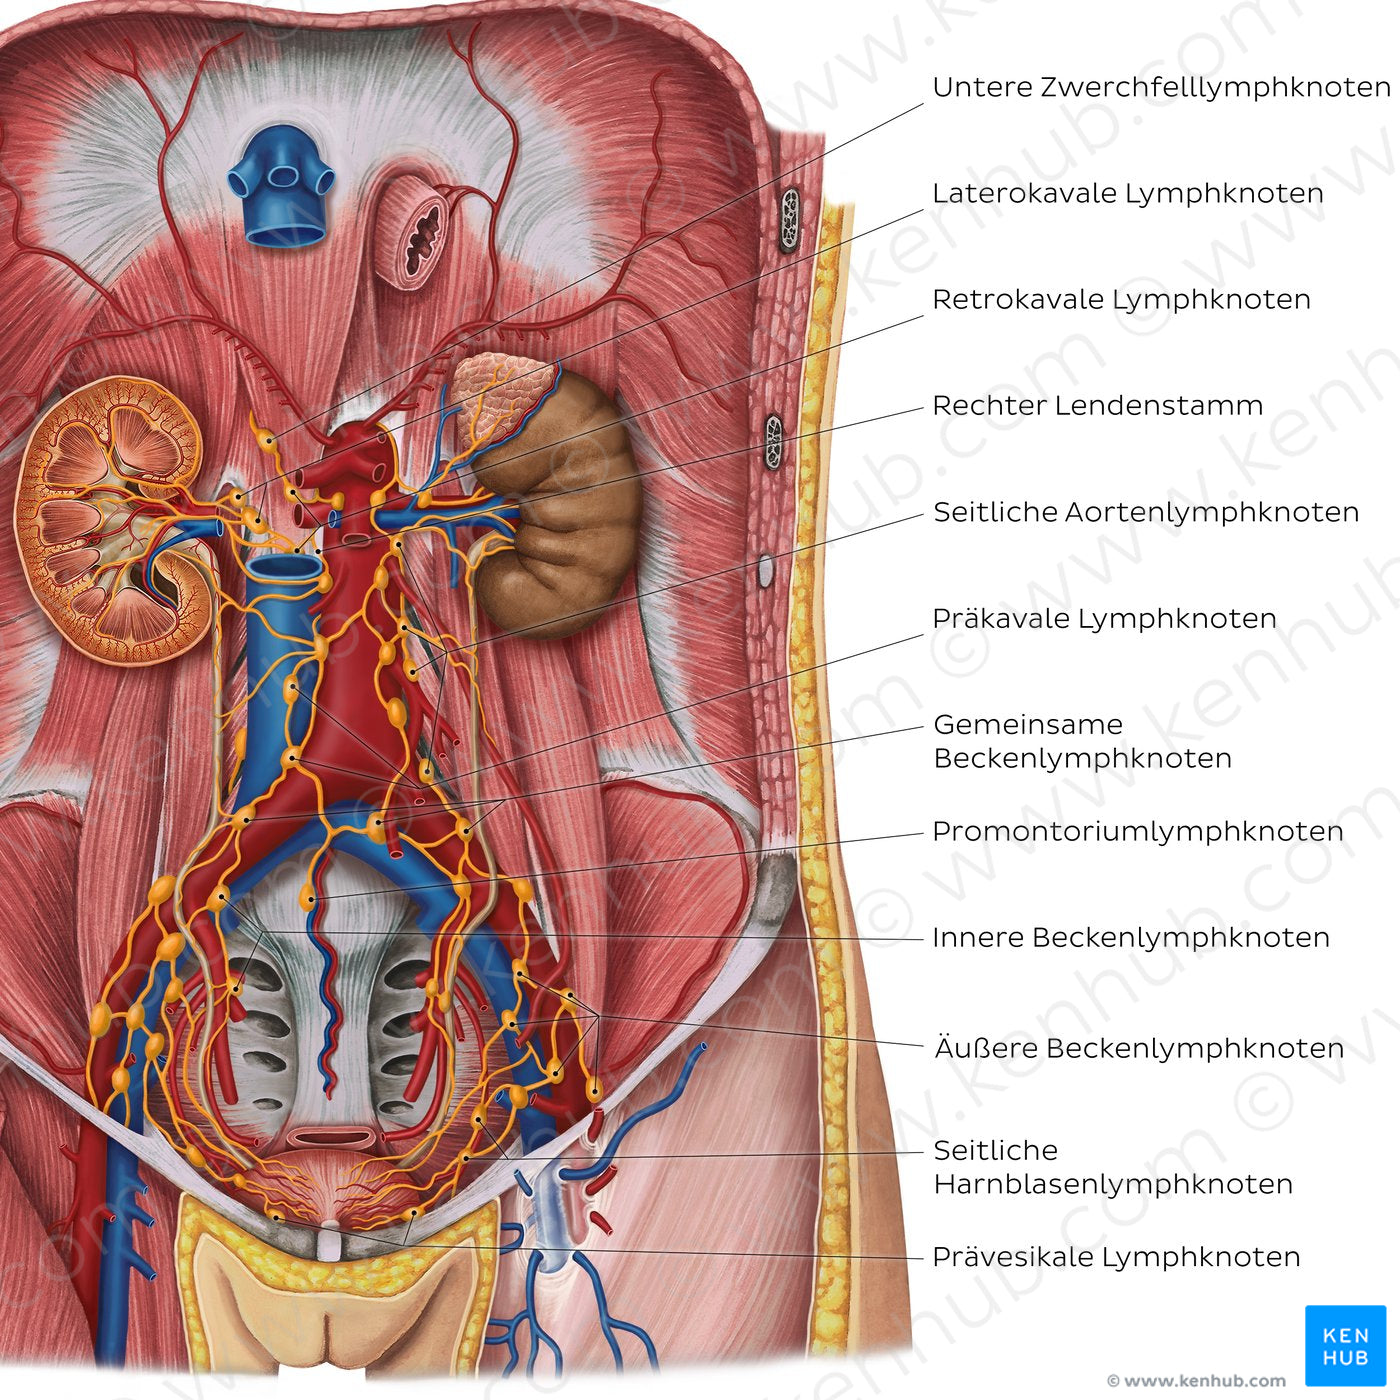 Lymphatics of the urinary organs (German)